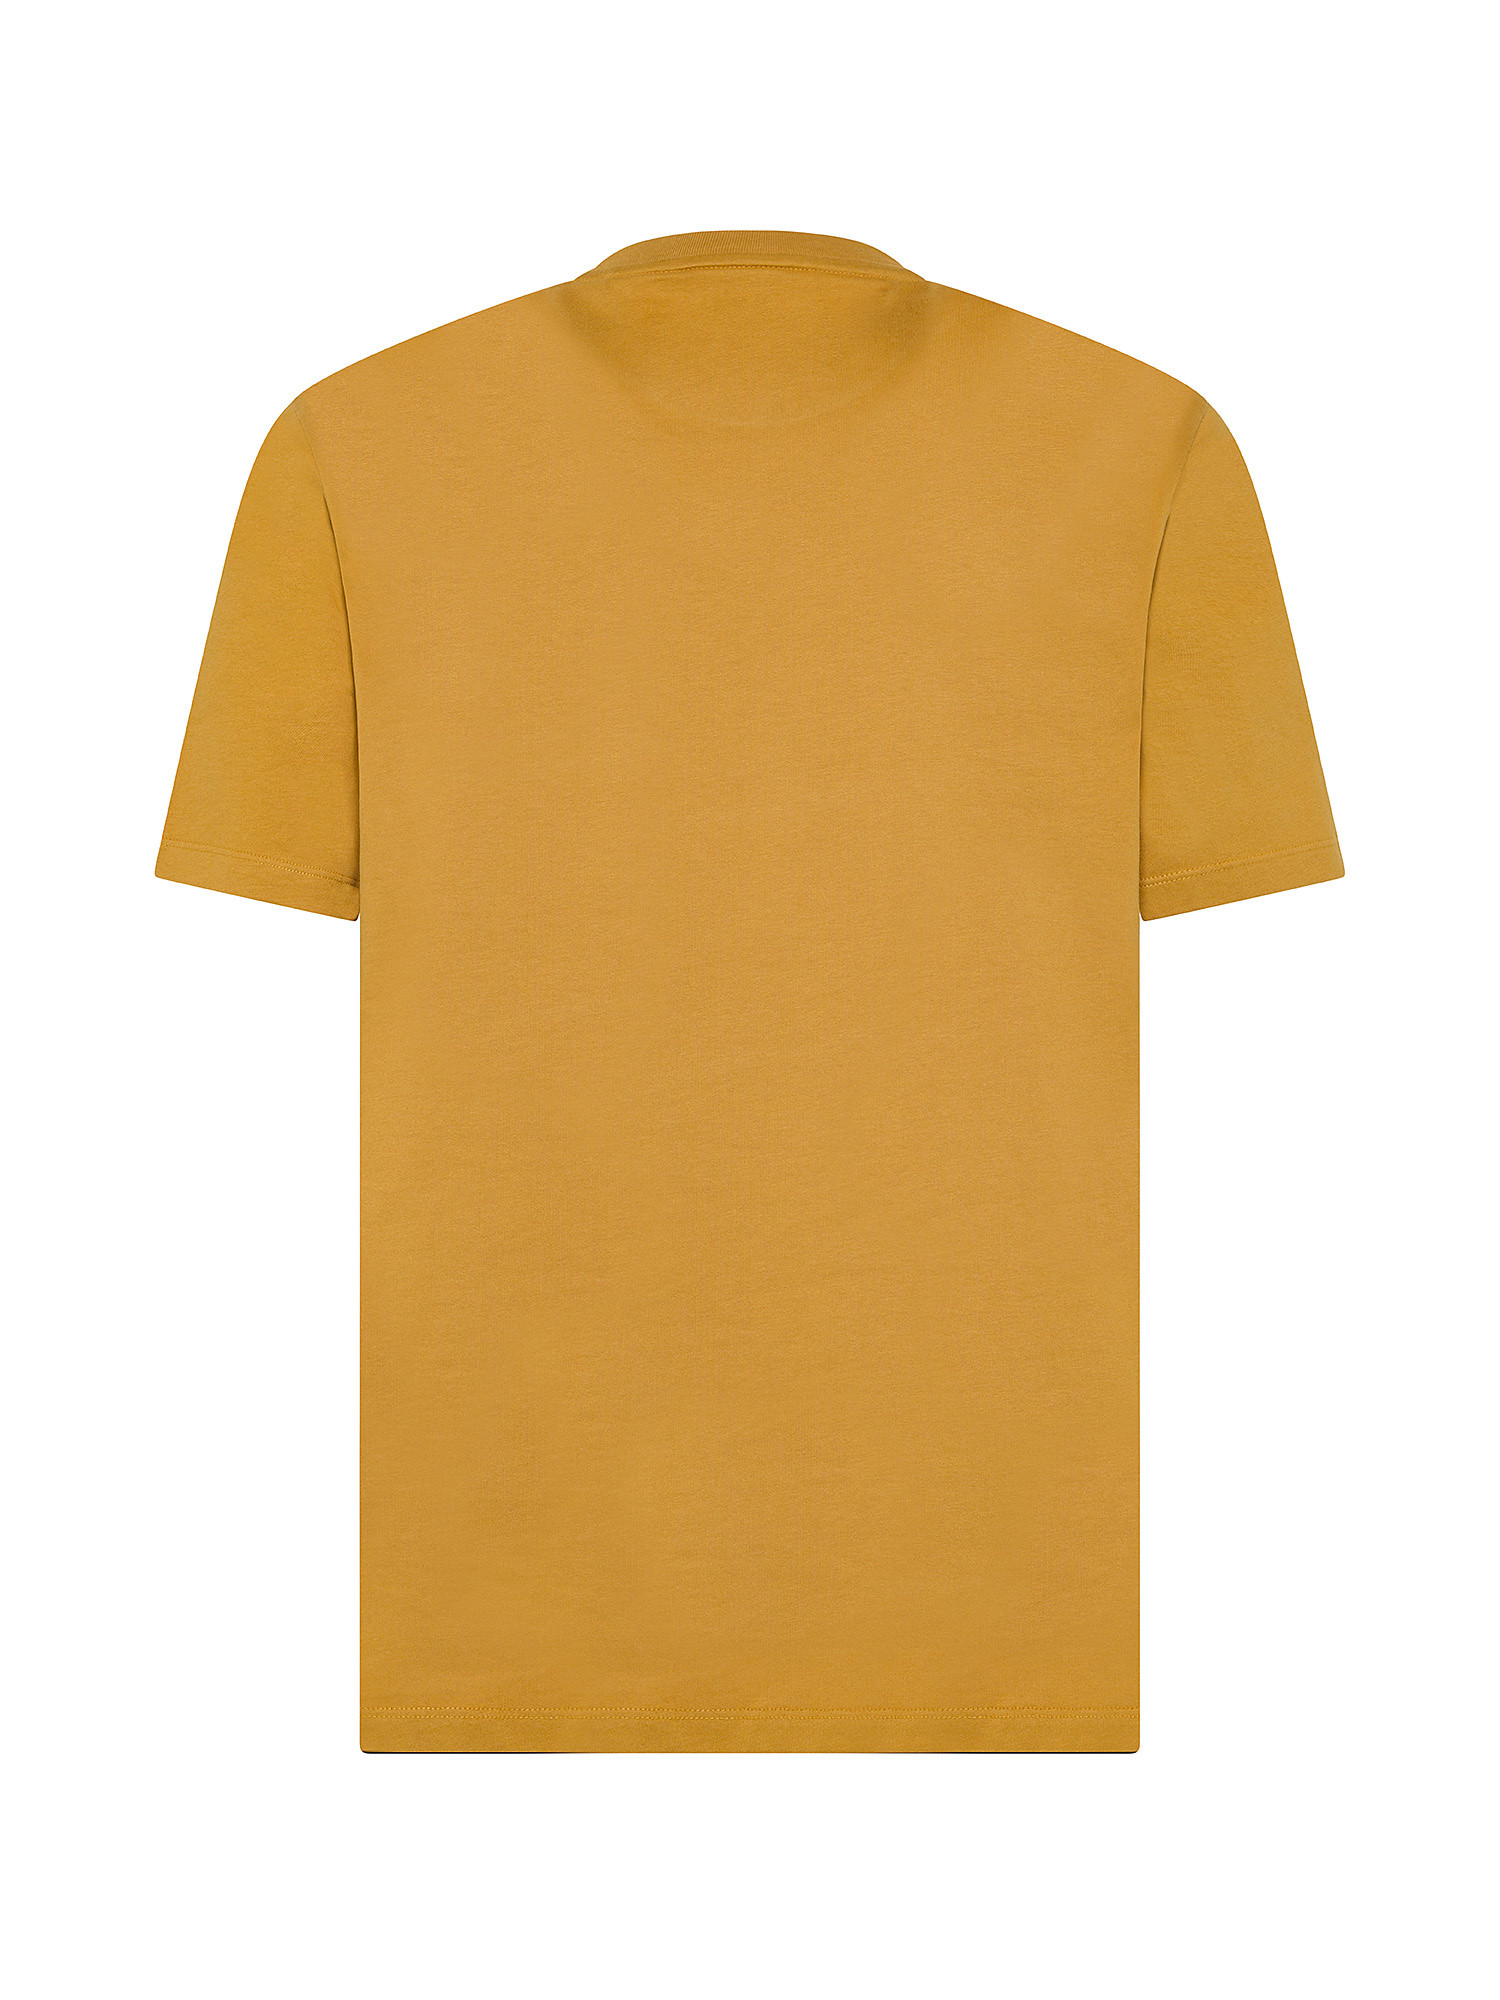 Hugo - T-shirt con logo ricamato in cotone, Cammello, large image number 1